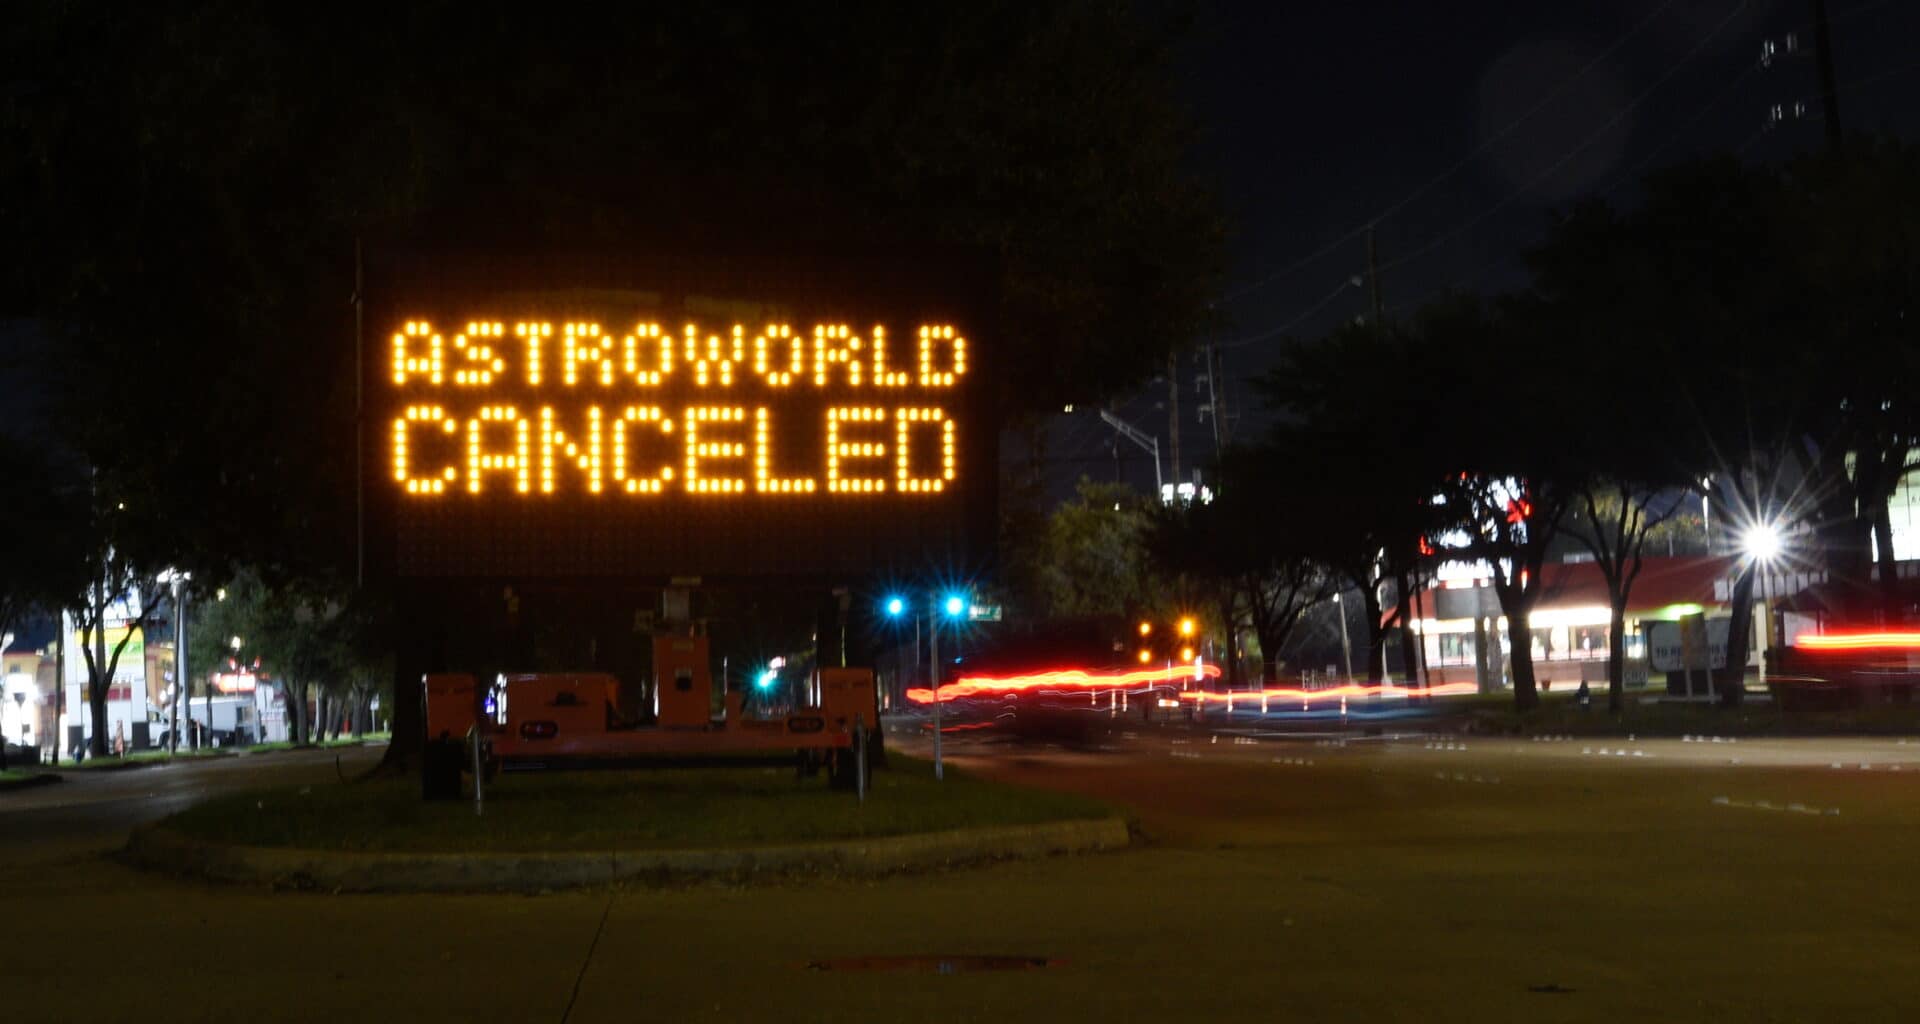 Astroworld Canceled